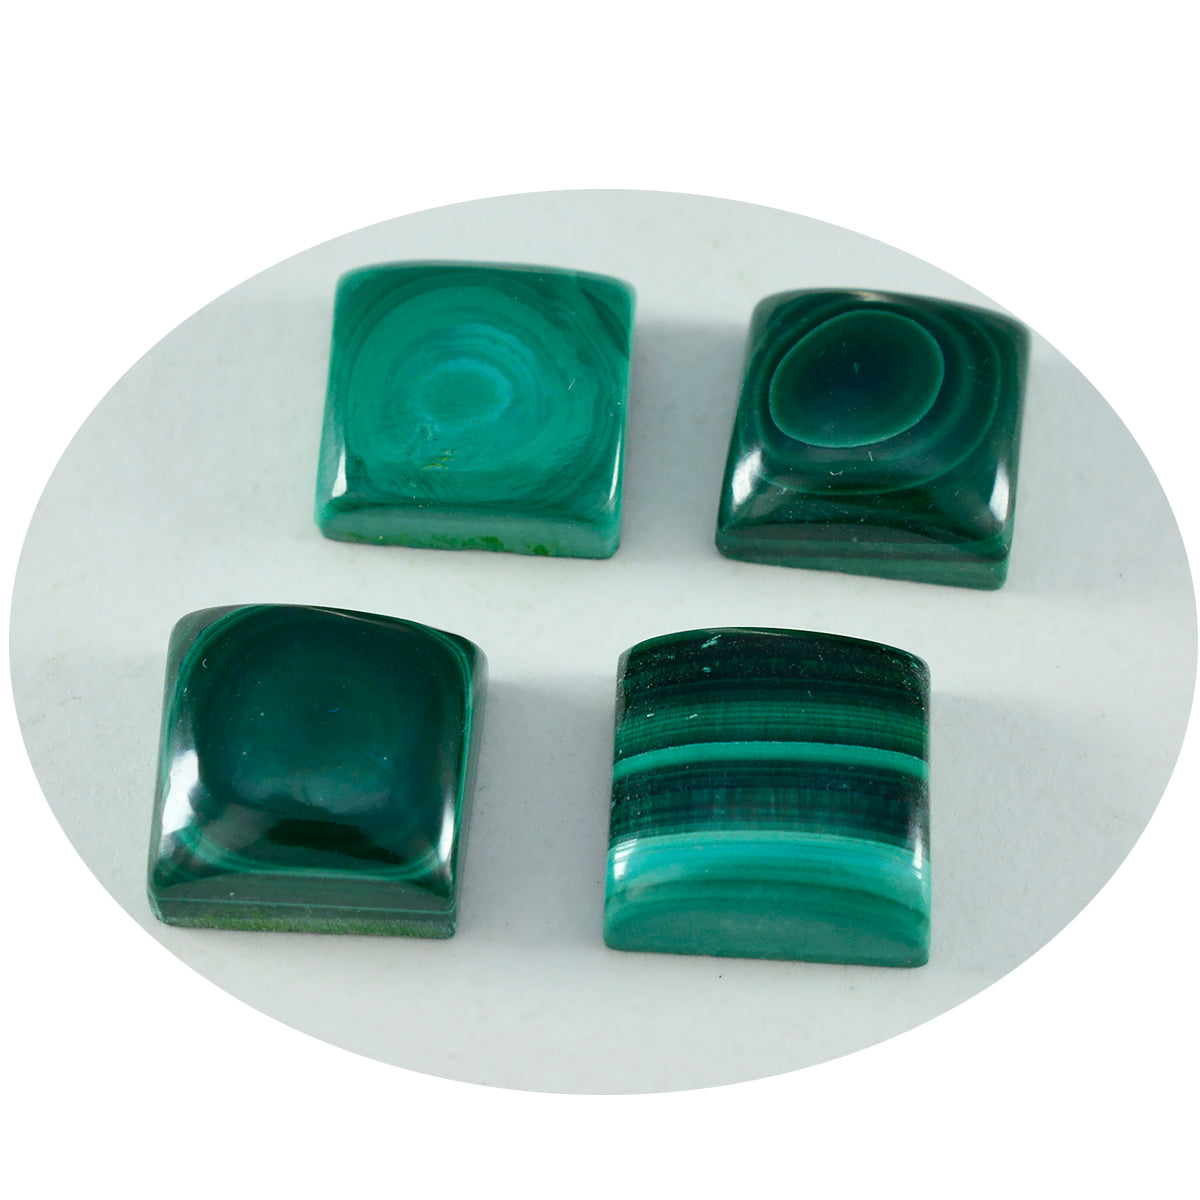 riyogems 1 st grön malakit cabochon 12x12 mm fyrkantig form a+ kvalitet lös sten